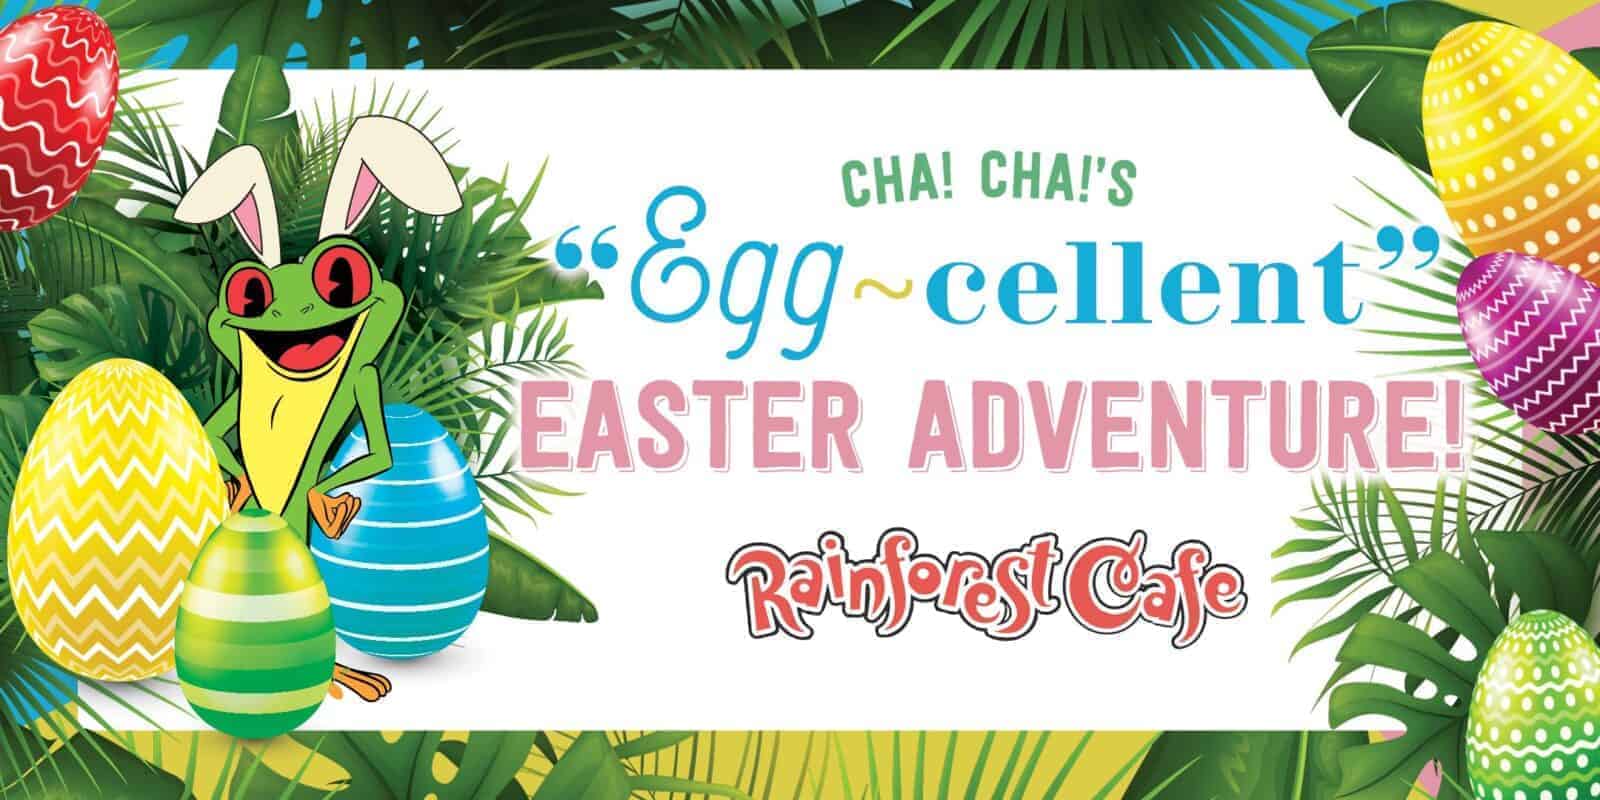 Cha! Cha!’s EggCellent Easter Adventure Rainforest Cafe Sawgrass